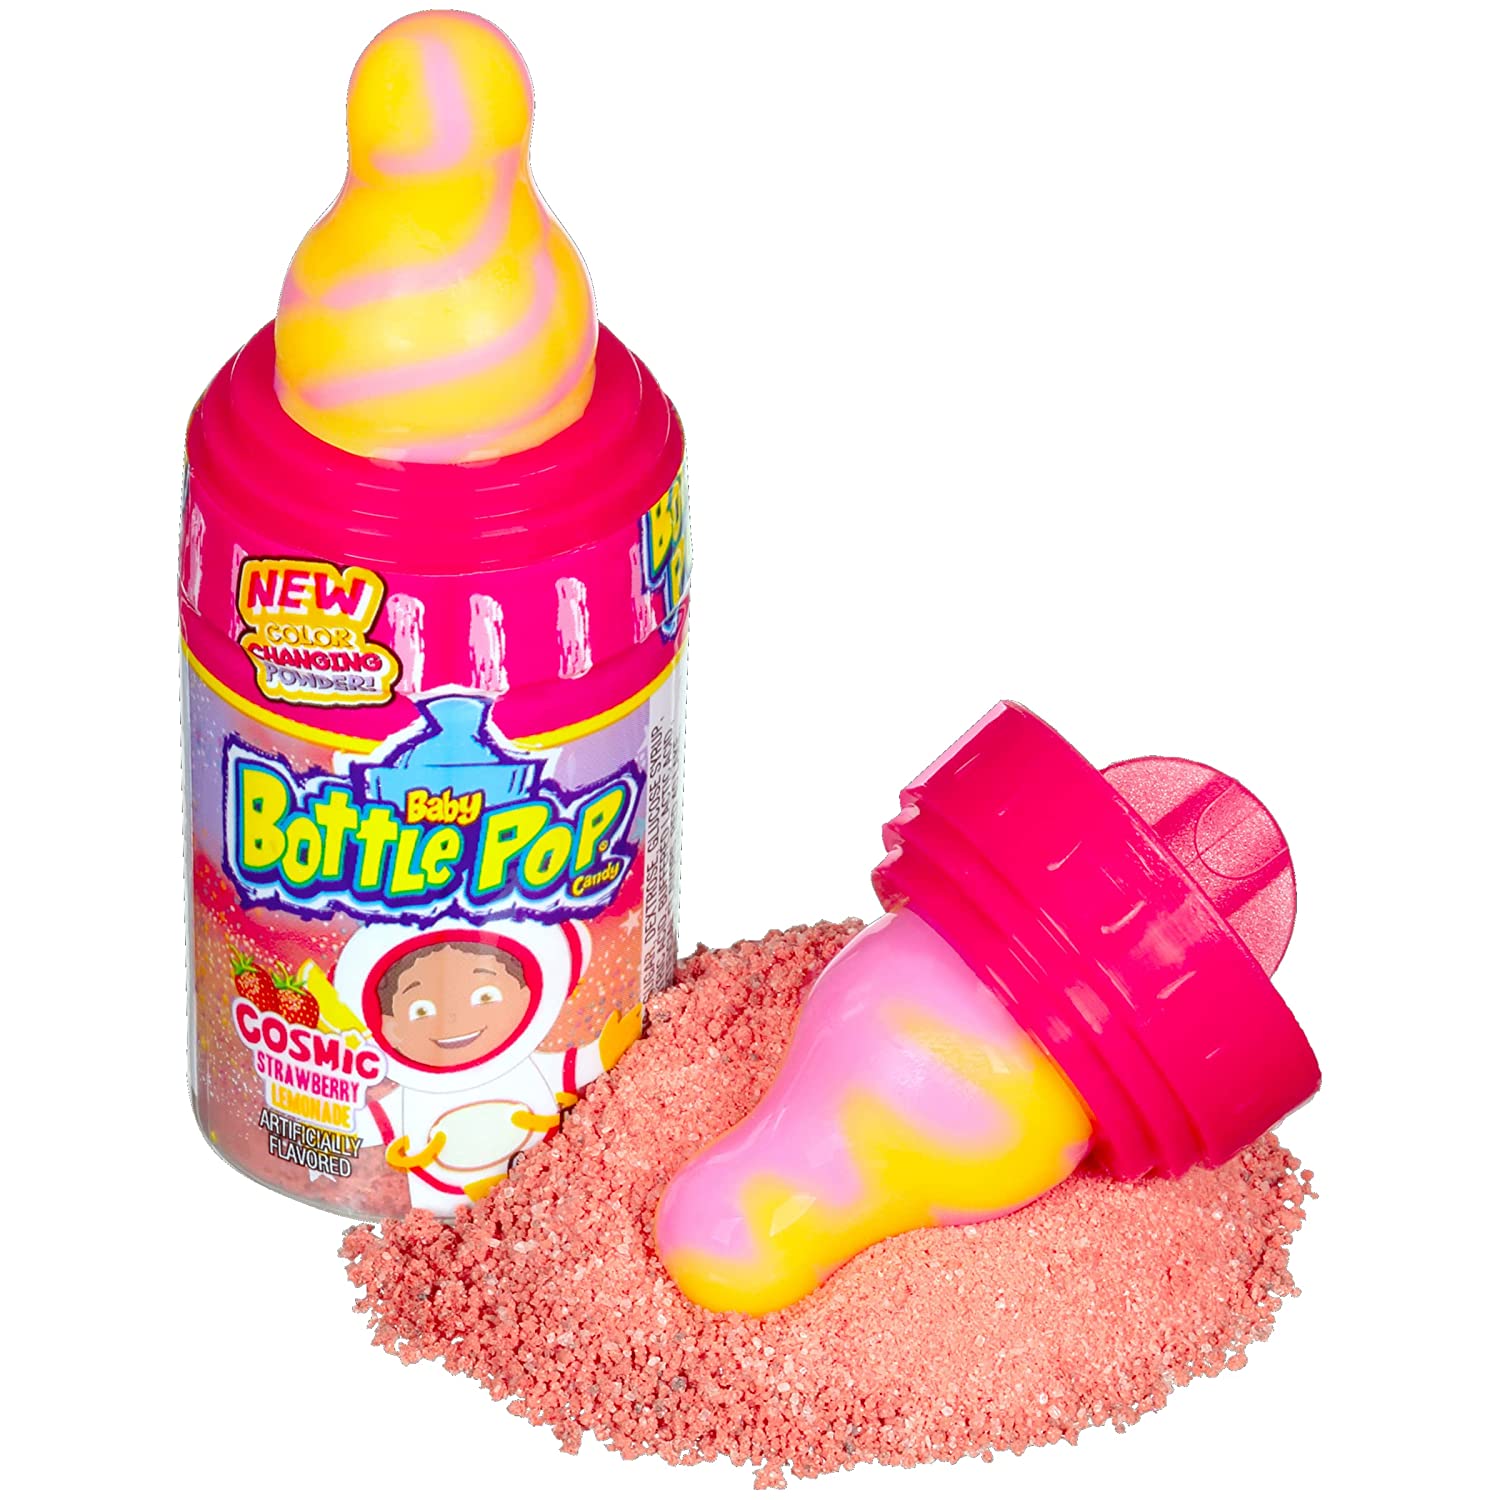 Reduce Axis Candy Pop Water Bottle - Pink, 18 oz - Kroger